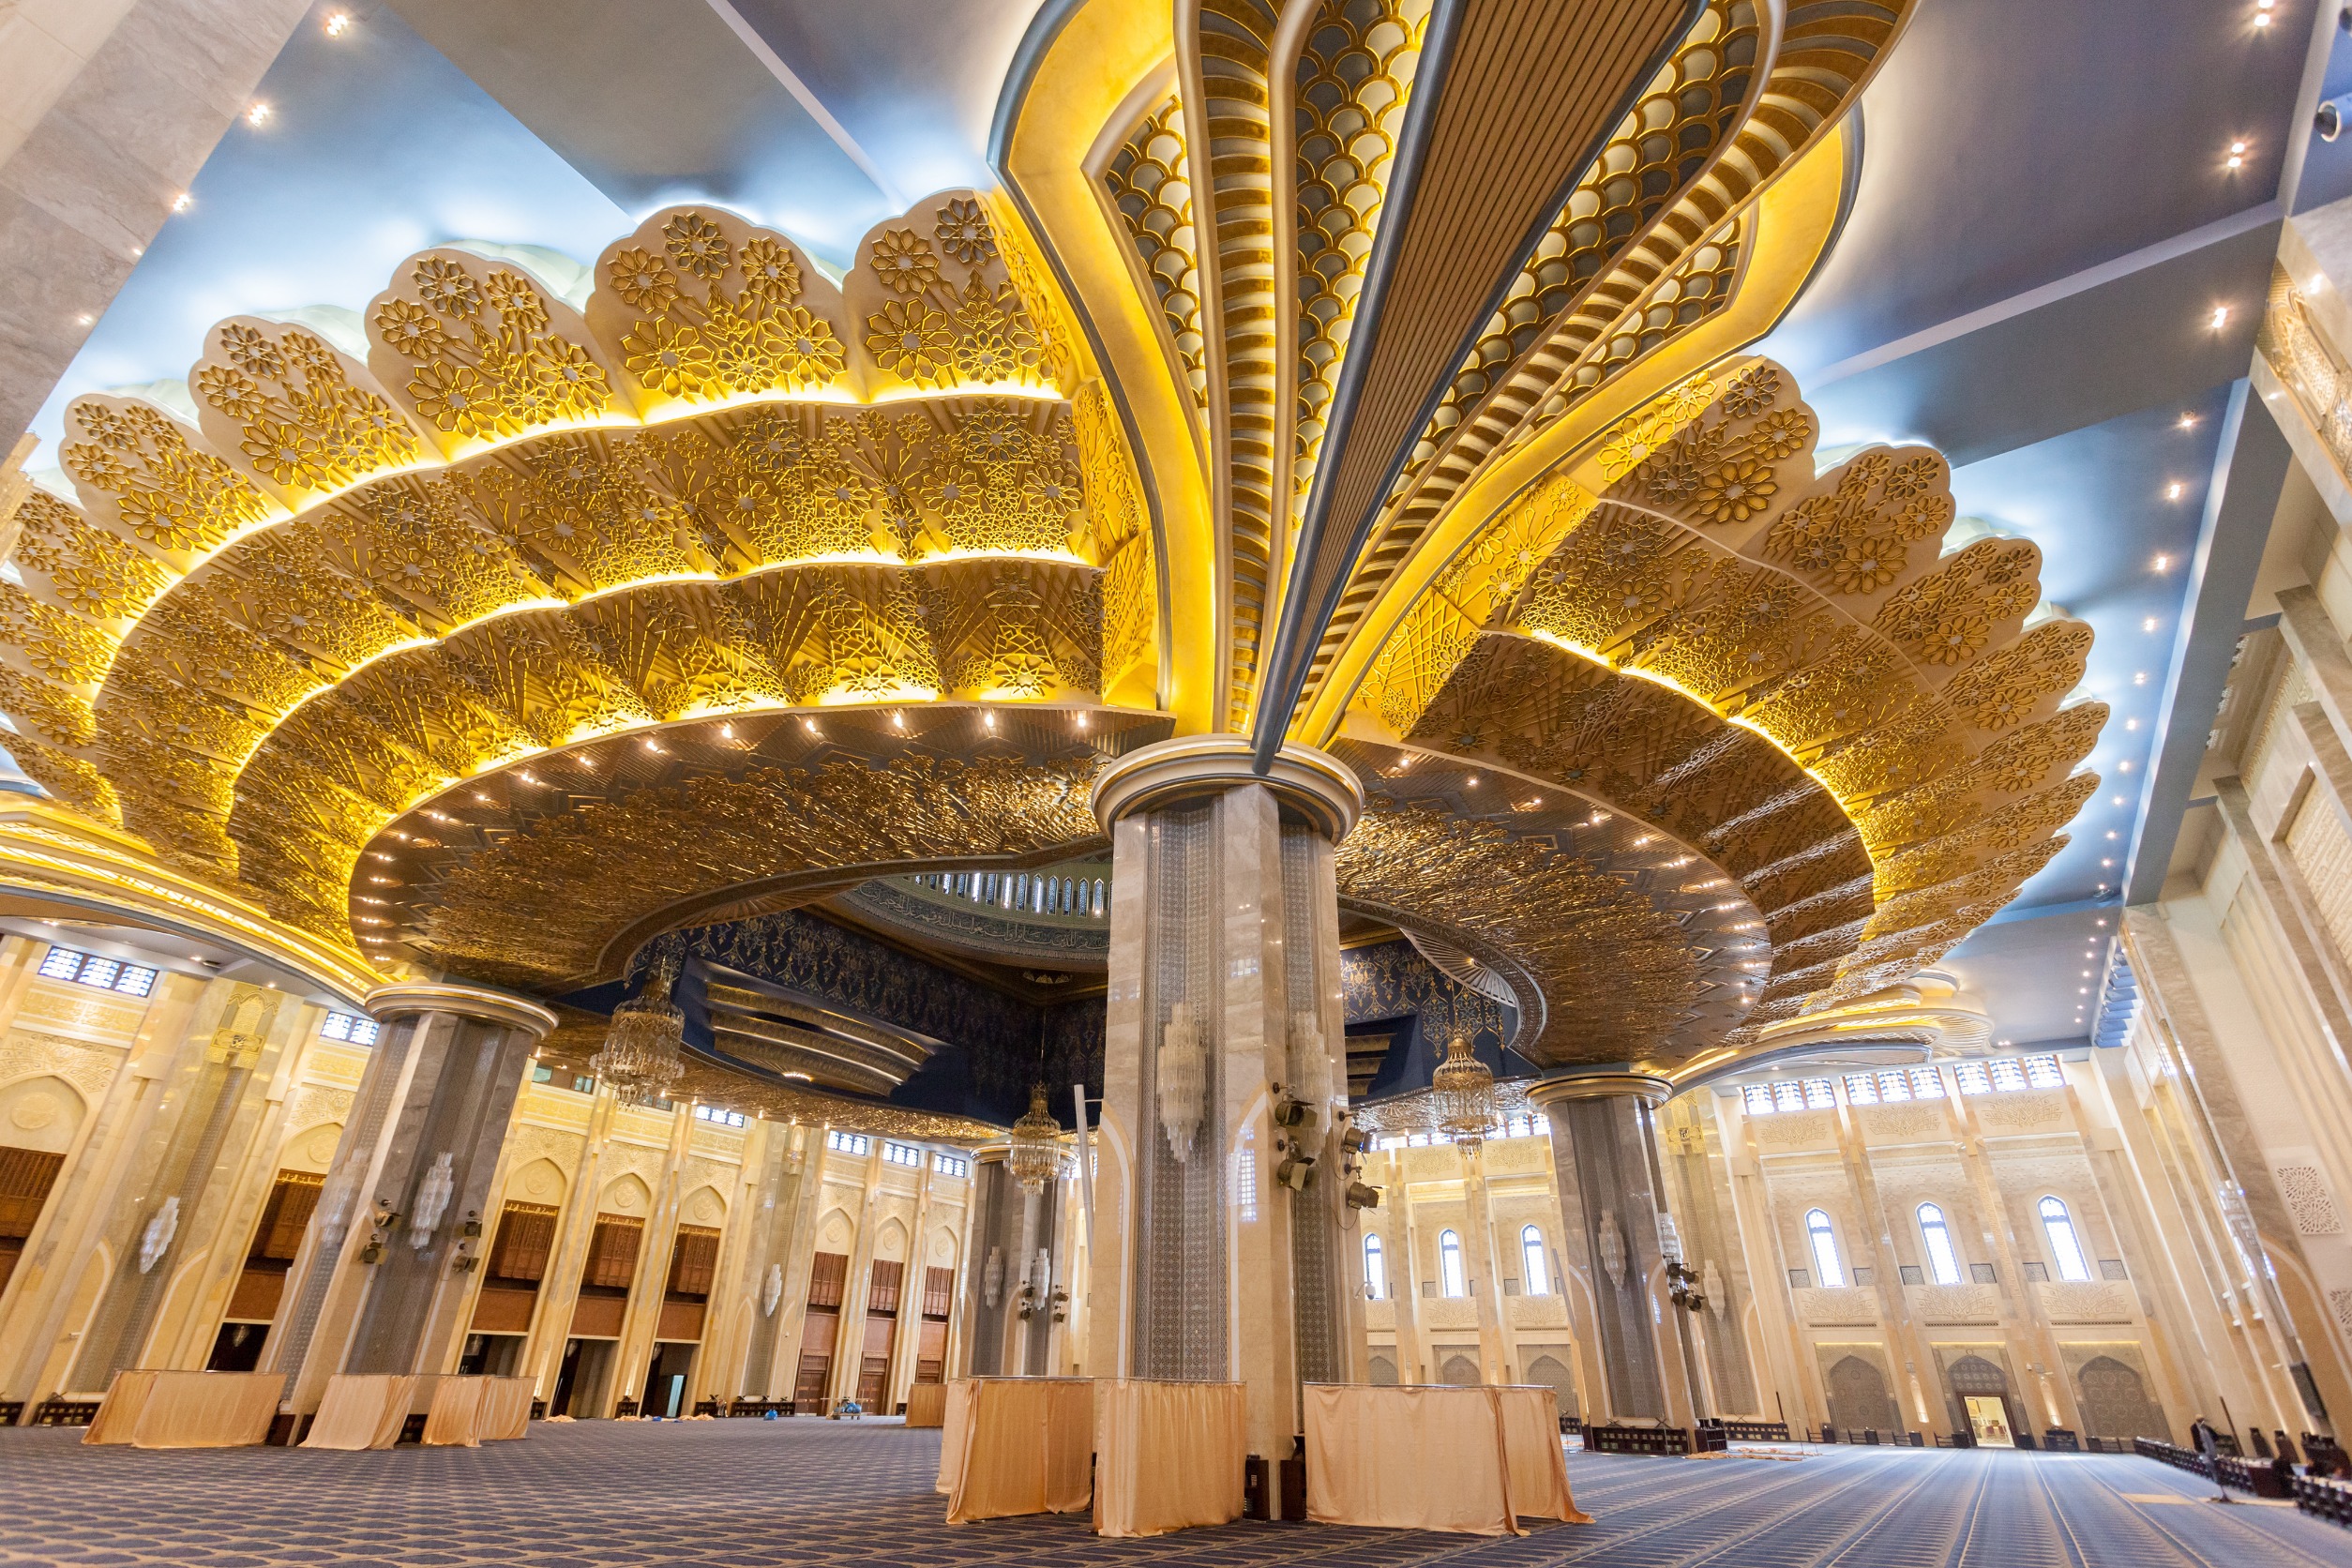 Explore the Grand Mosque